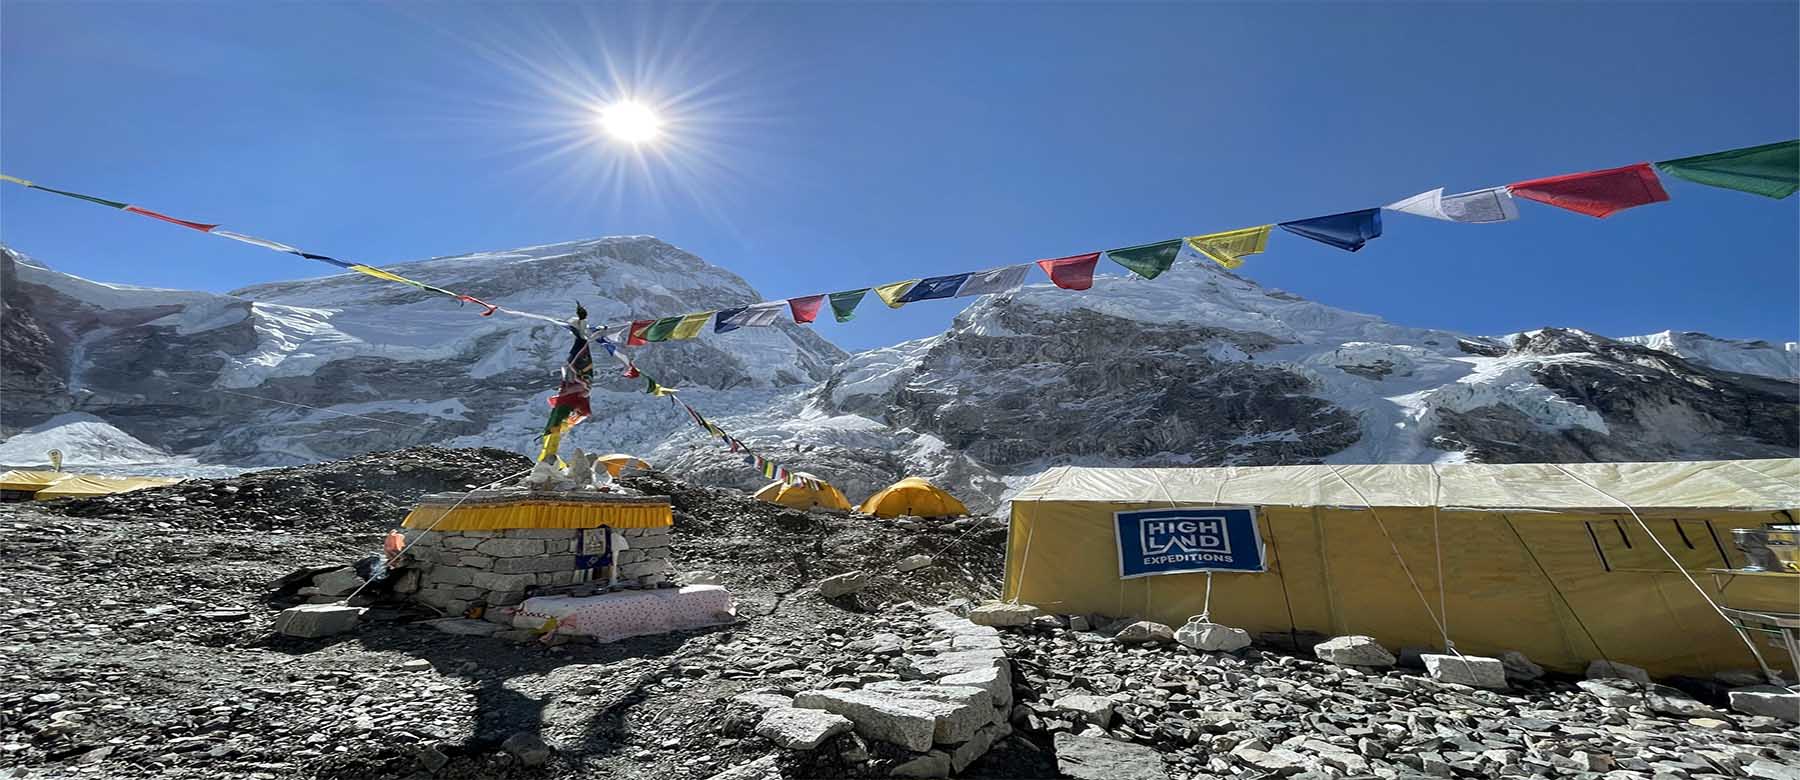 Sleep at Everest base camp trek